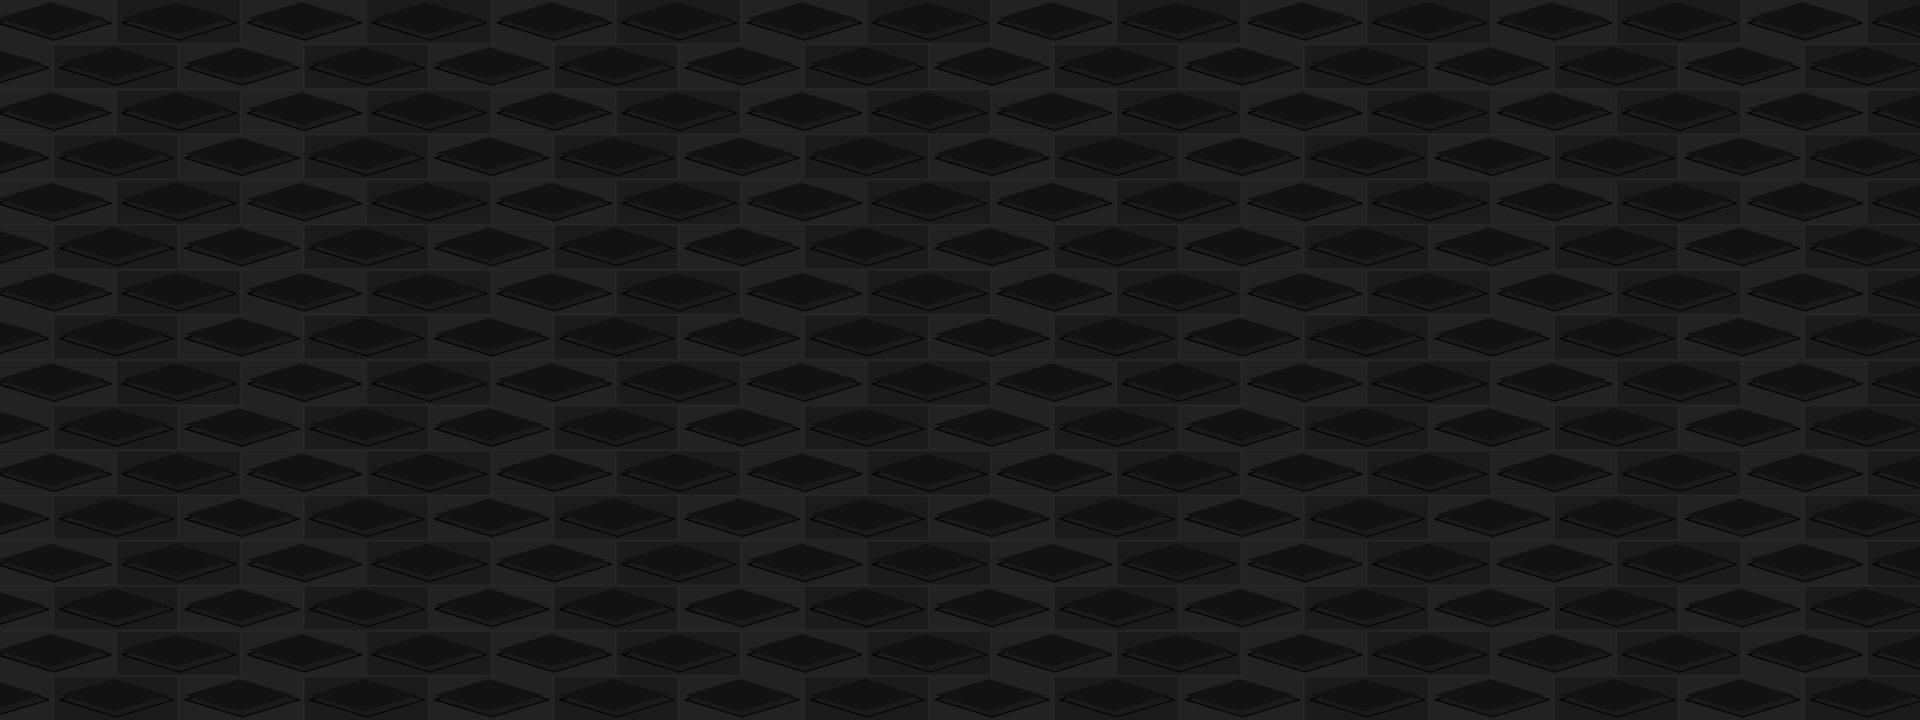 patrón de textura de fondo abstracto ilustración de vector de telón de fondo de superficie negra